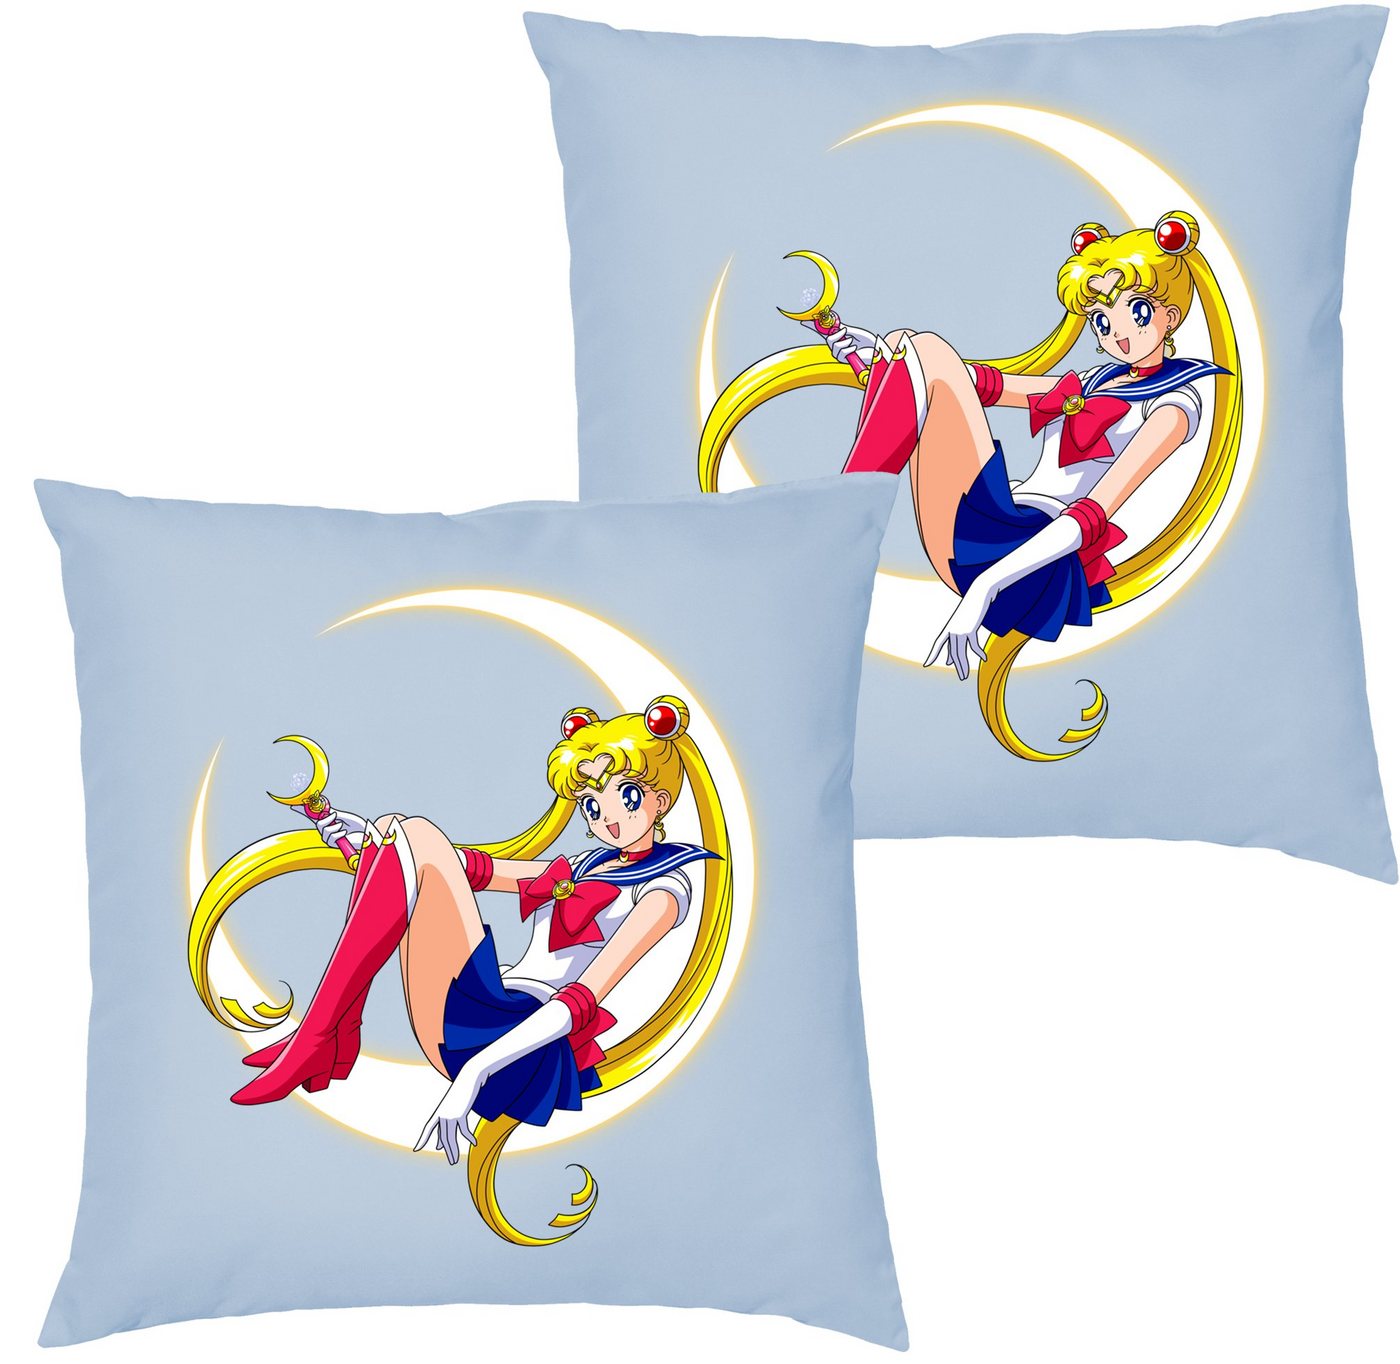 Blondie & Brownie Dekokissen Fun Comic Sailor Moon Anime Manga von Blondie & Brownie